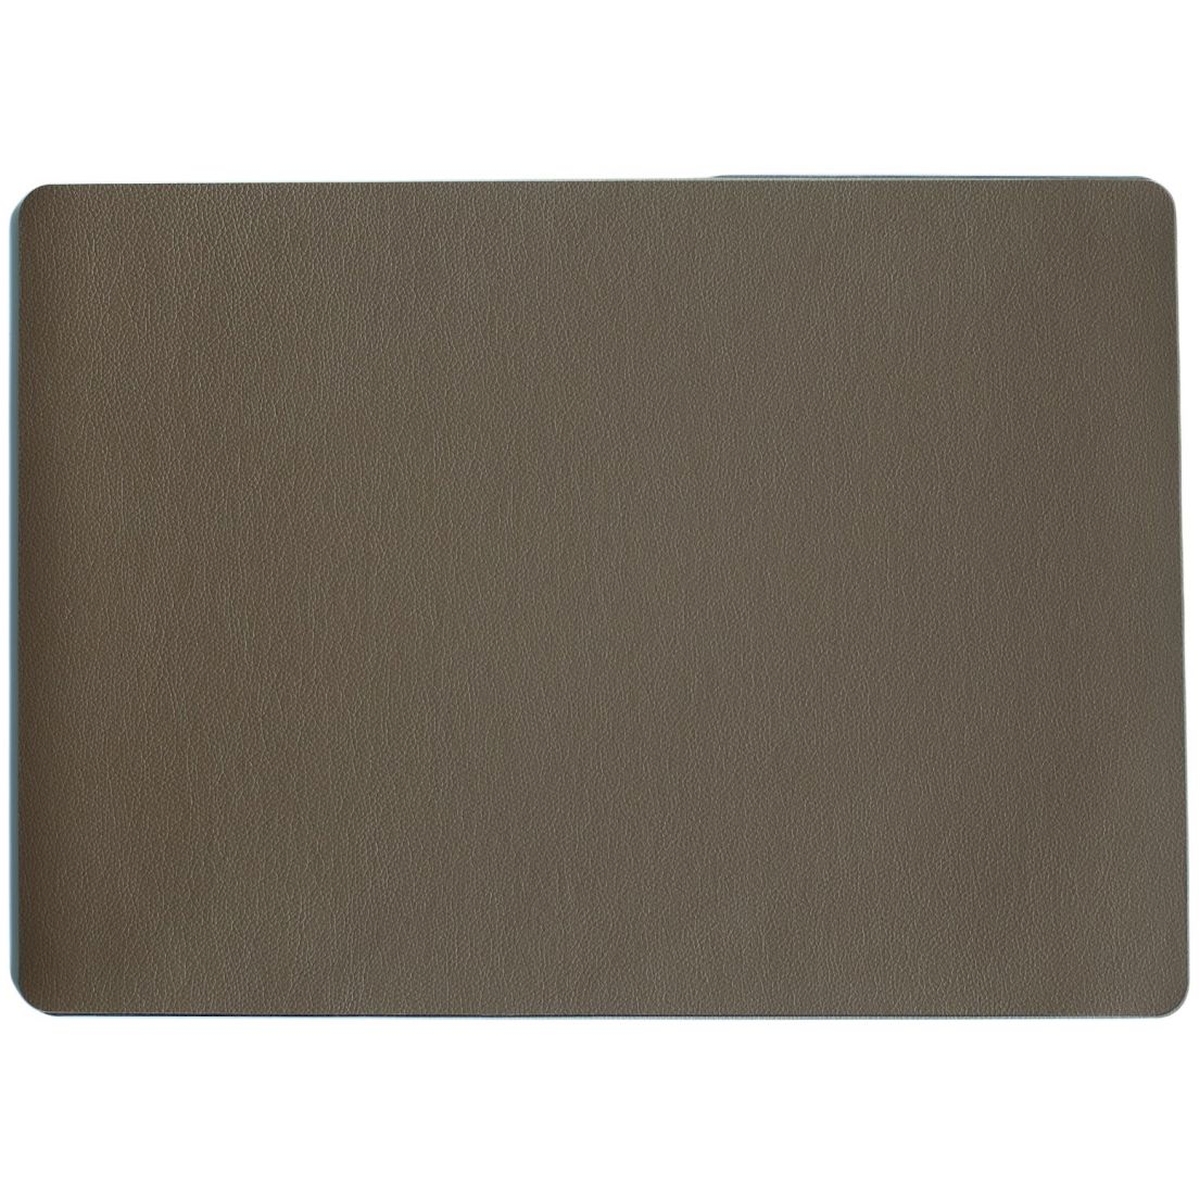 Салфетка под посуду Leder светло-коричневый, 33 х 46 см (Asa Selection 7803/420)